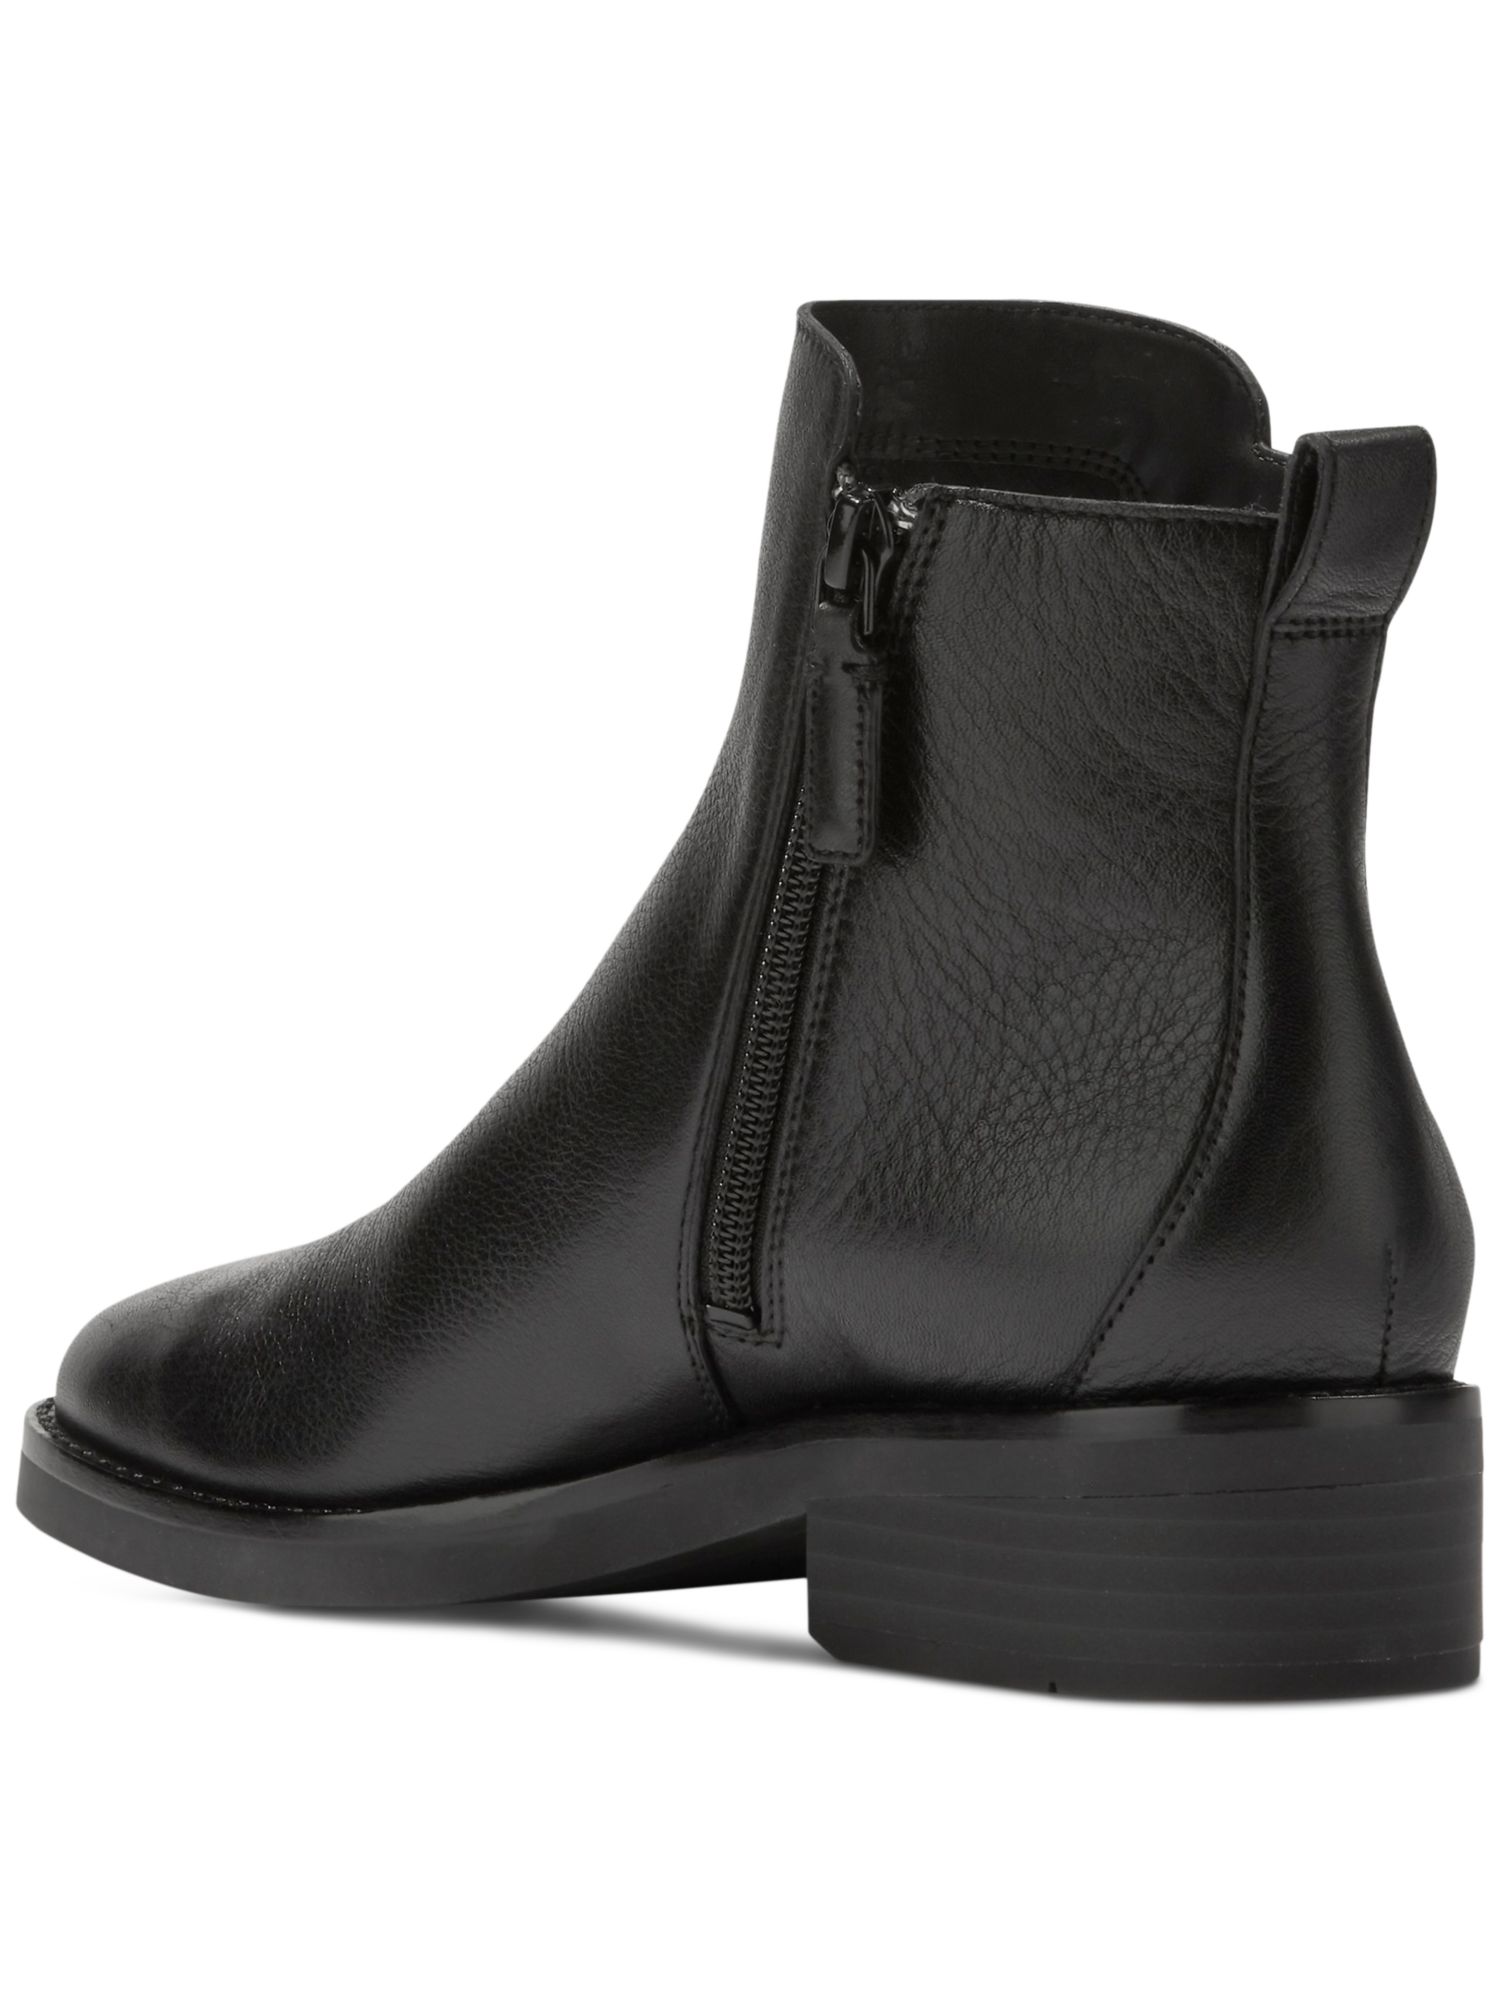 COLE HAAN Womens Black Padded River Almond Toe Block Heel Zip-Up Leather Booties 9.5 B